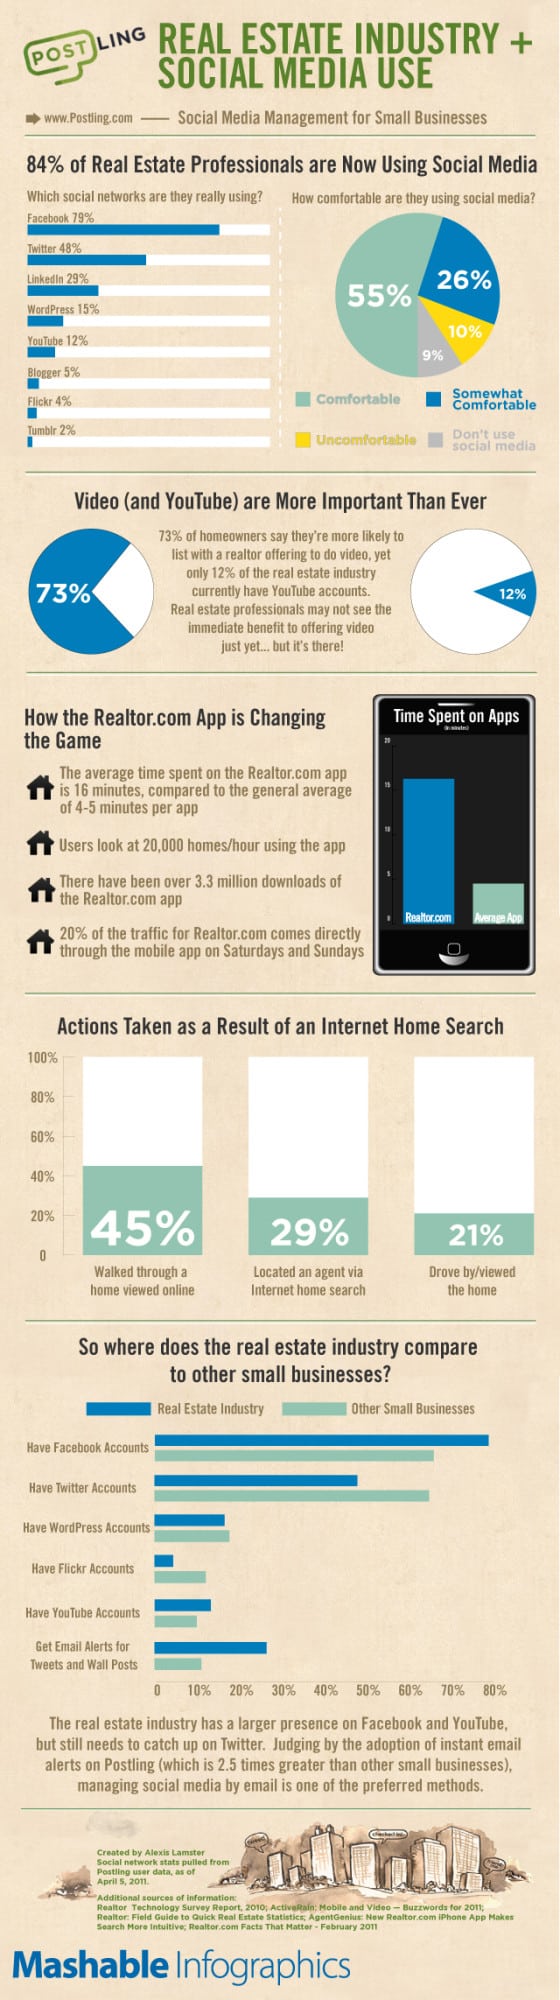 Real Estate Social Media Infographic by Postling.com